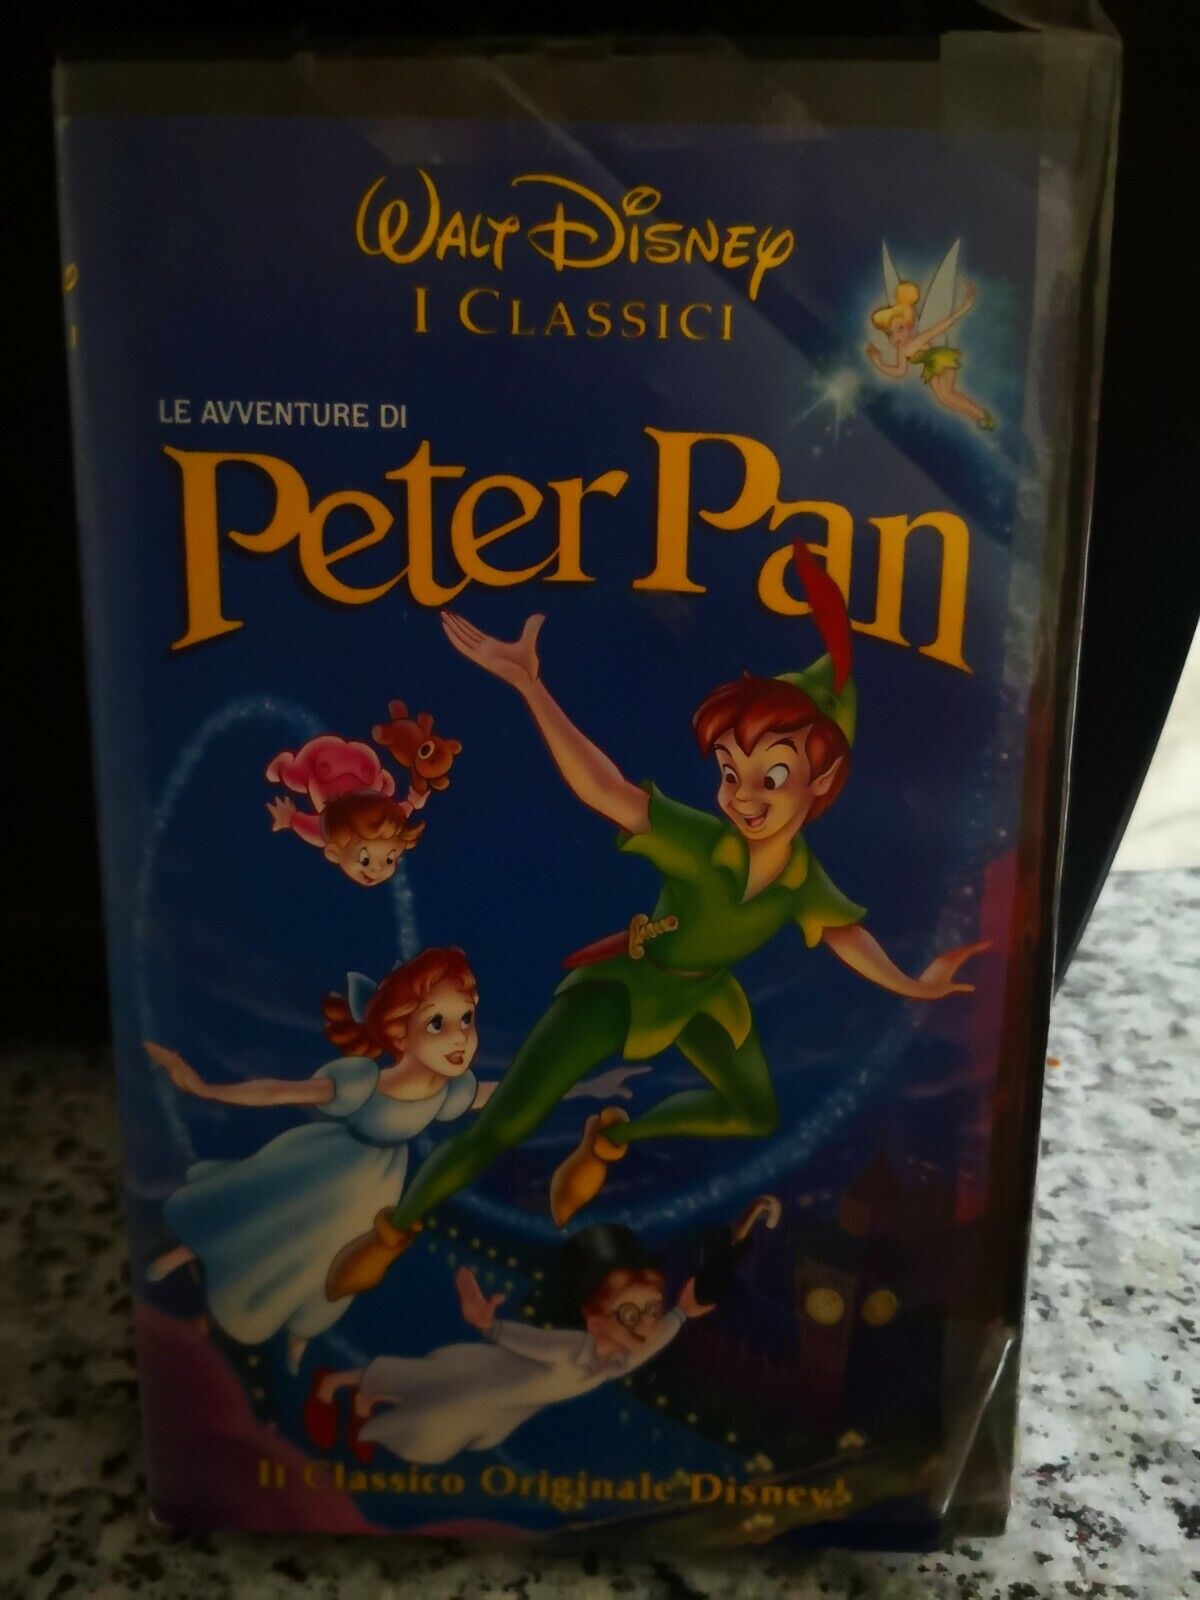 Le avventure di Peter Pan - vhs -1993 - Walt Disney -F